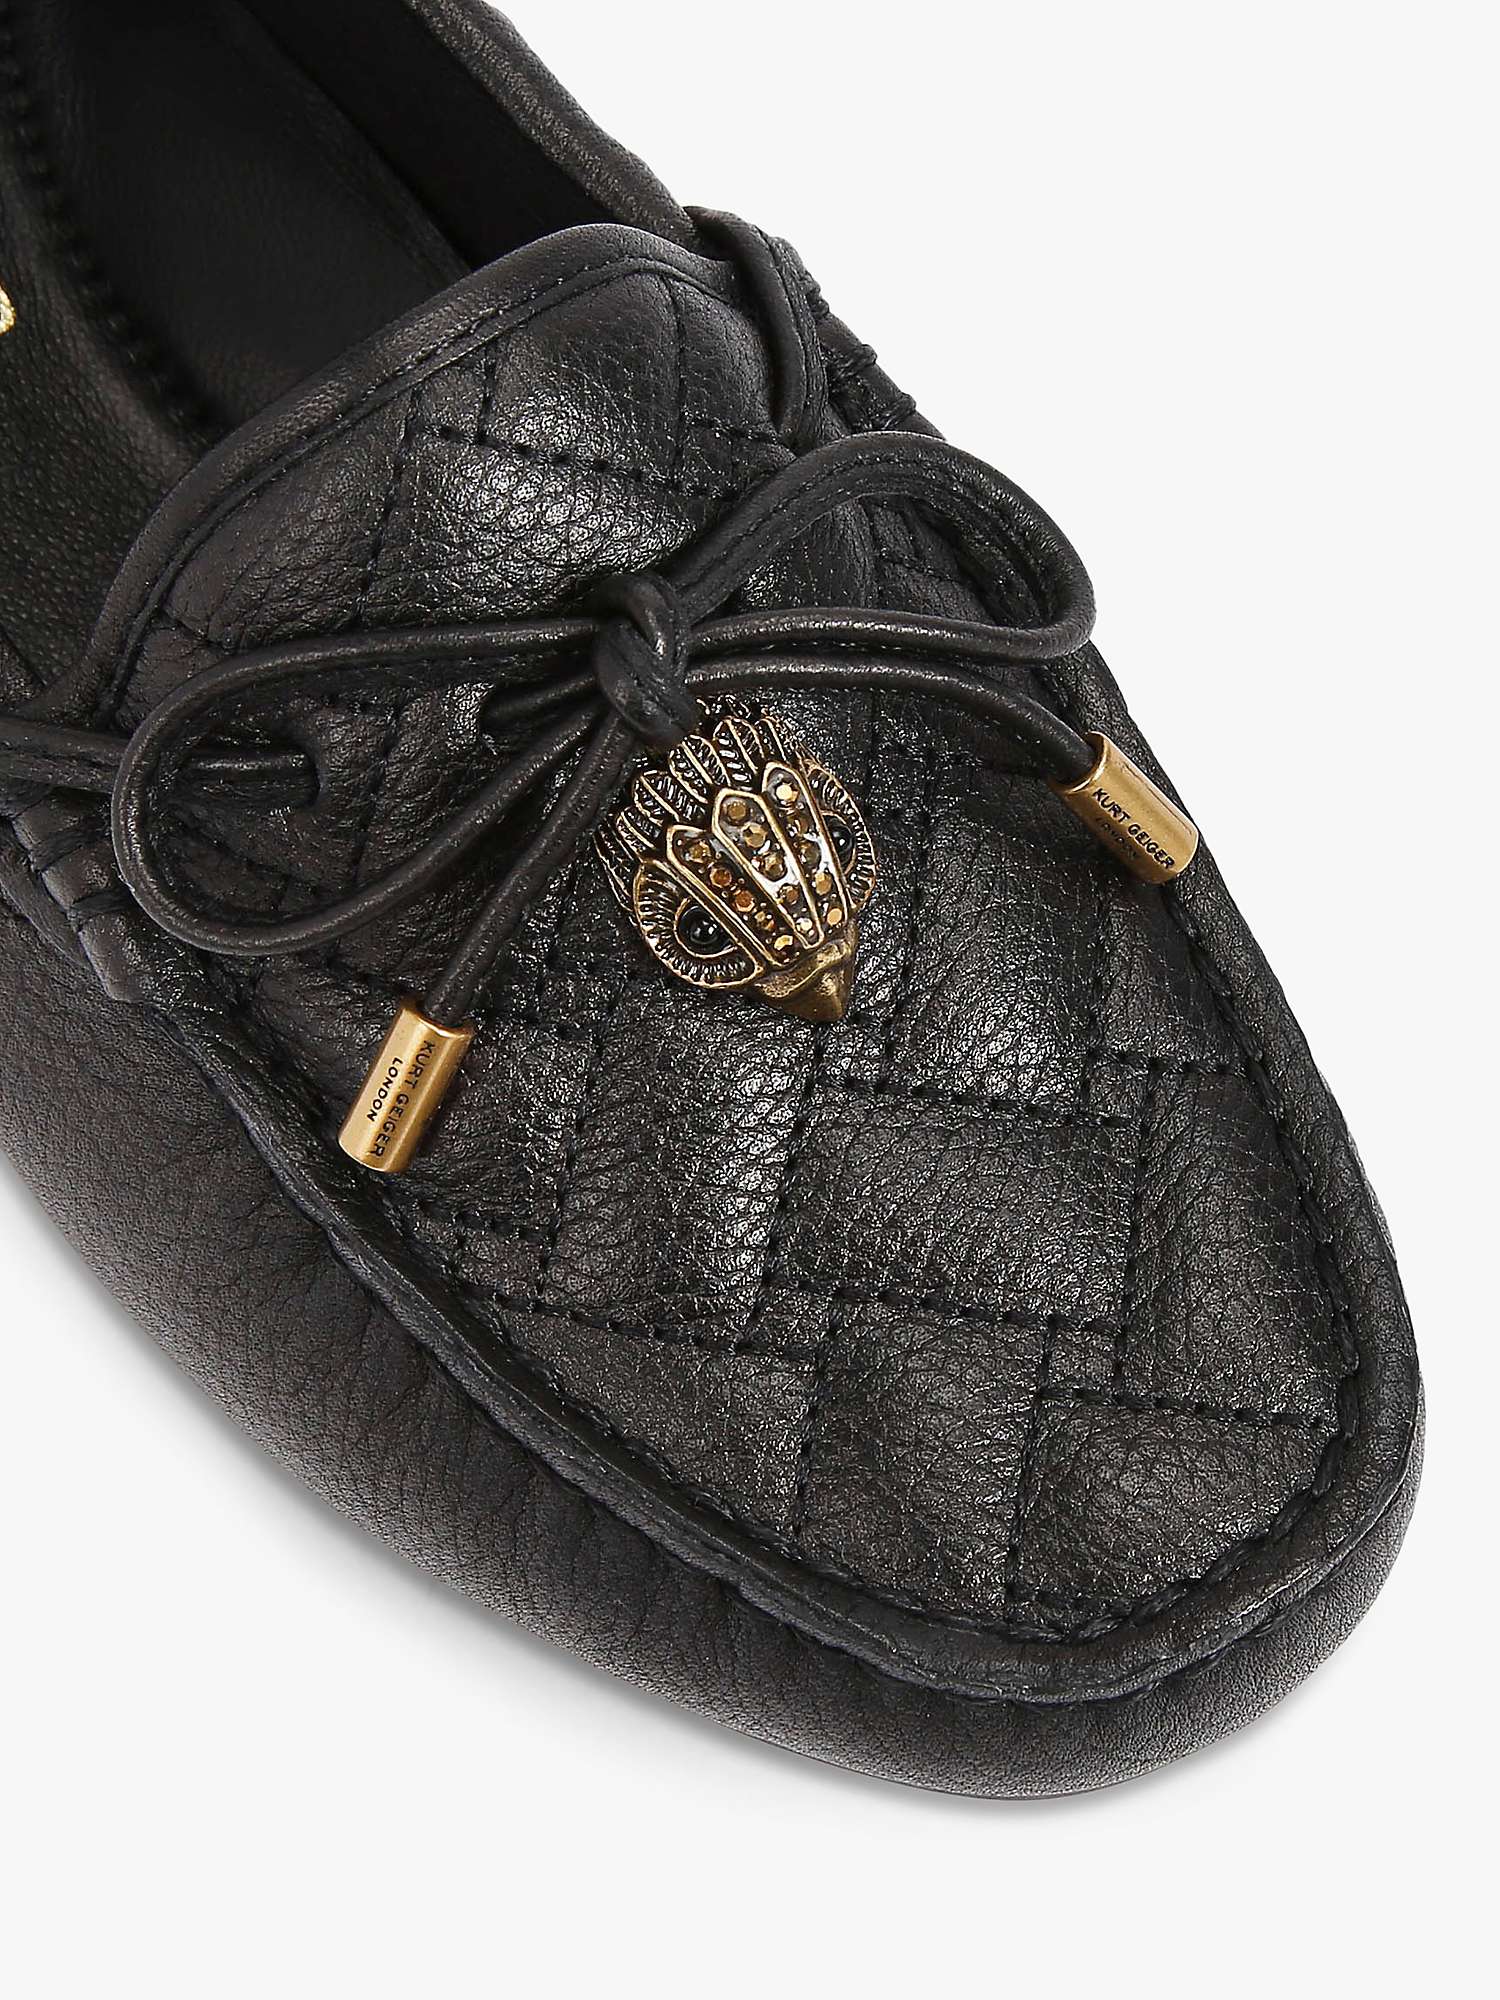 Buy Kurt Geiger London Eagle Leather Loafers Online at johnlewis.com